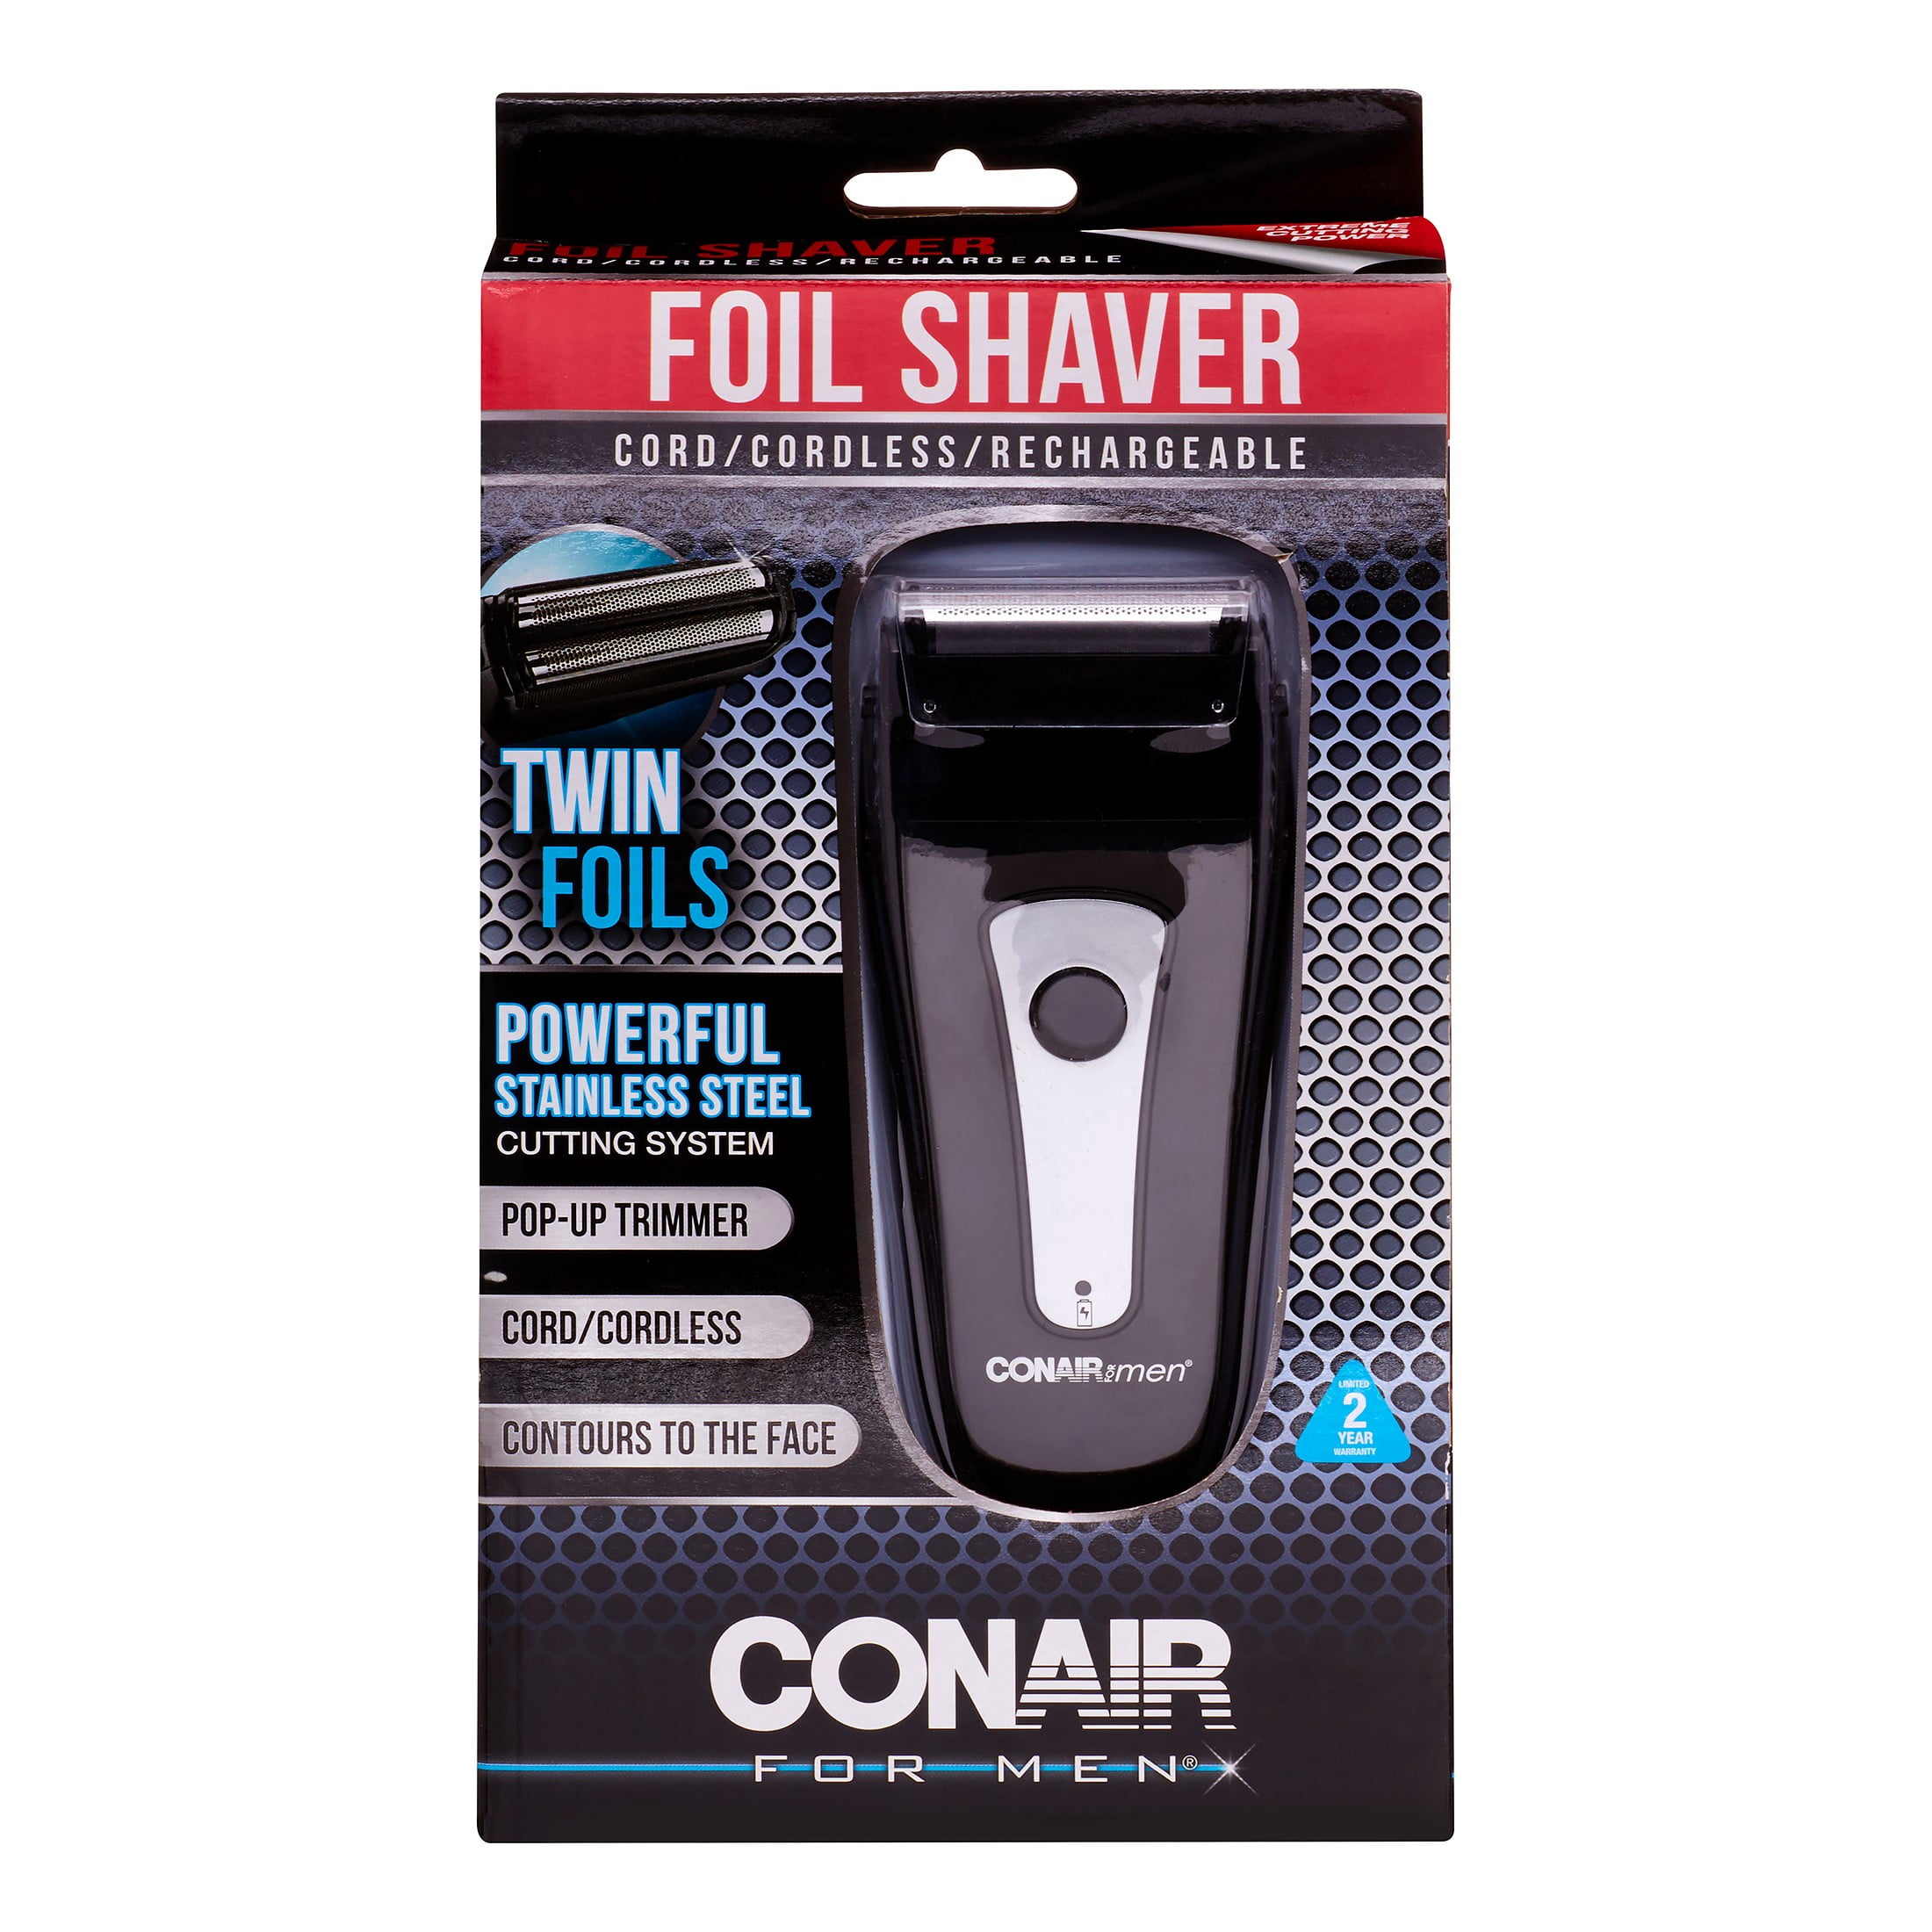 conair men's electric shaver